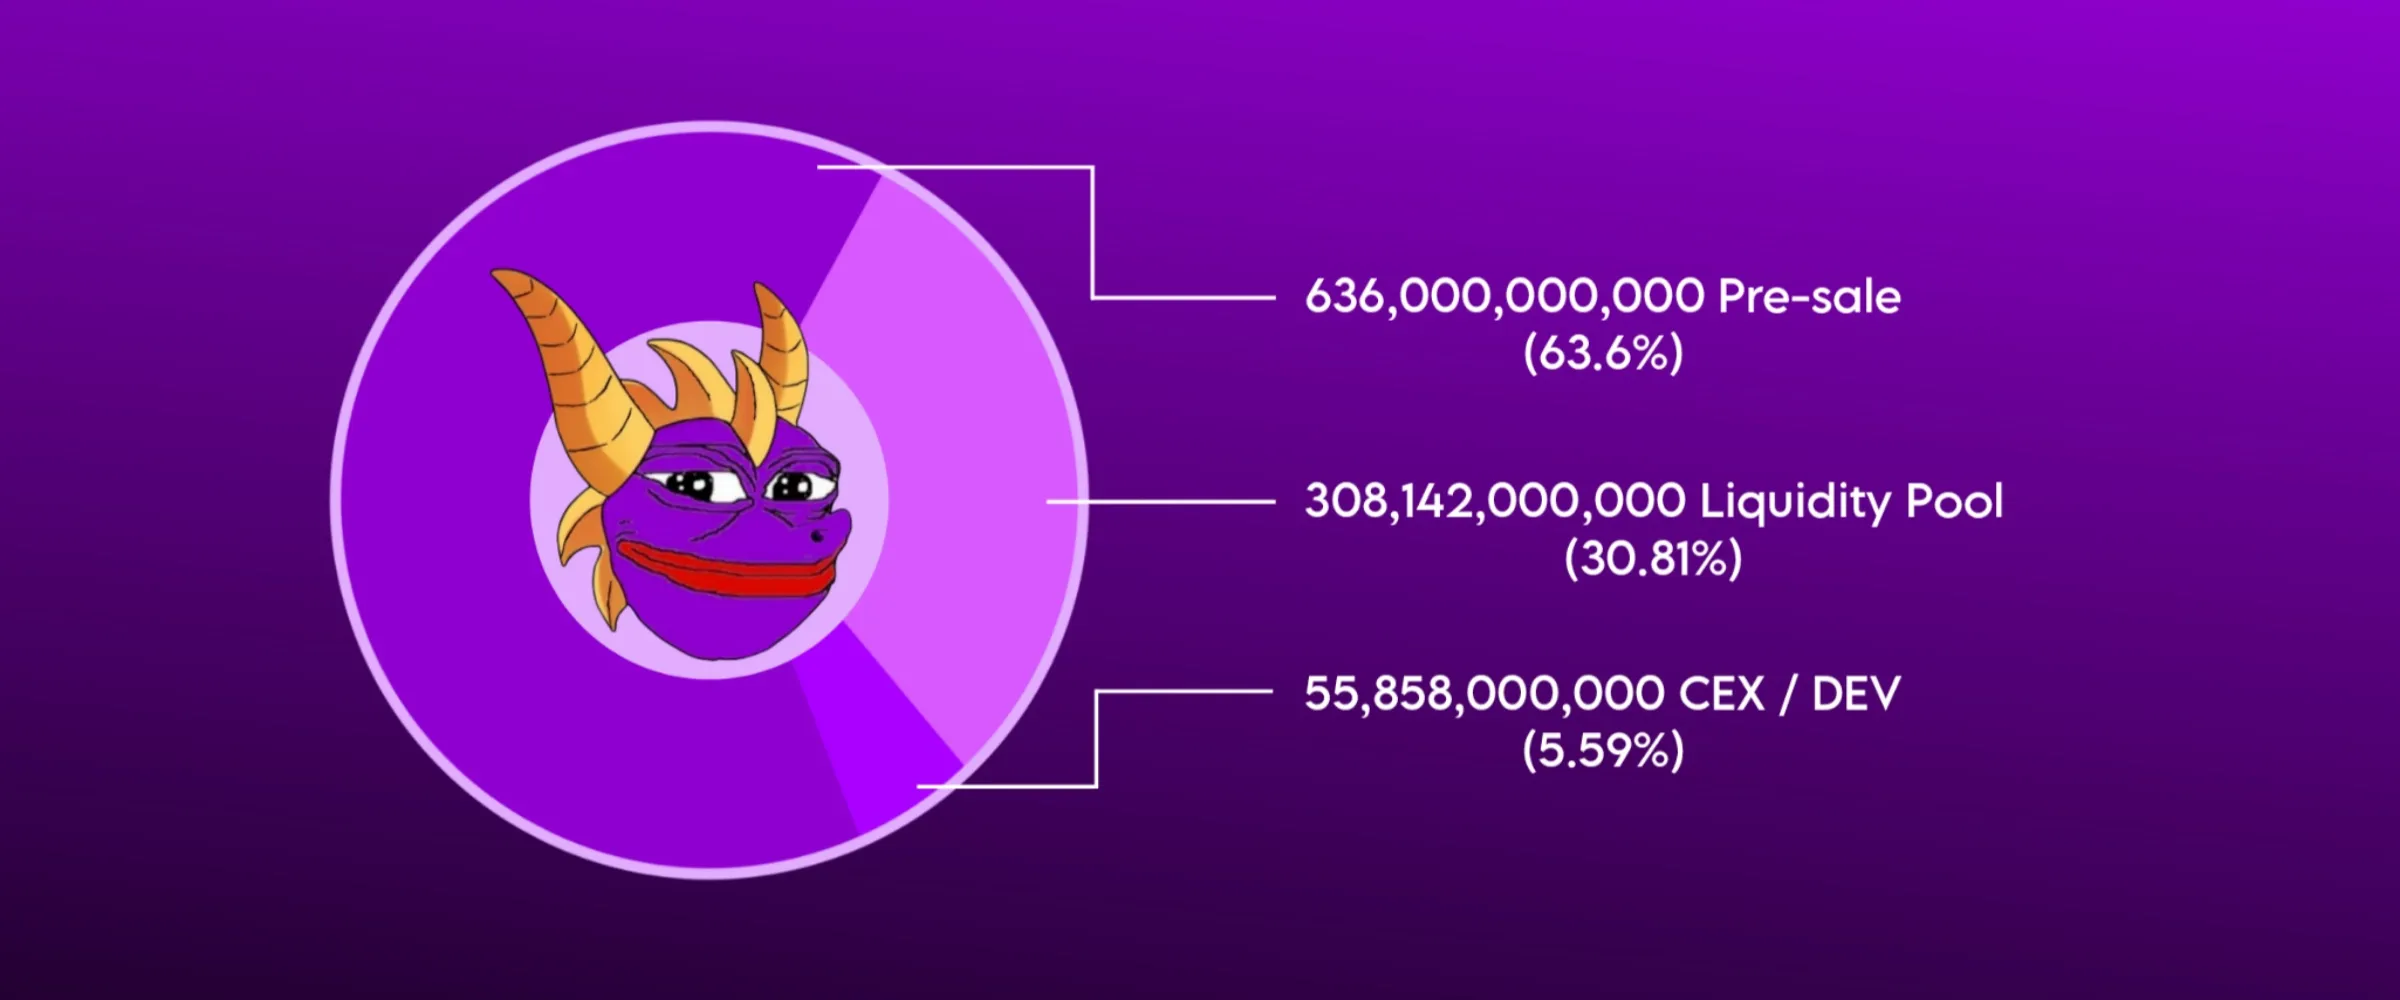 , Introducing Spyro: The Legendary Meme Dragon of Crypto